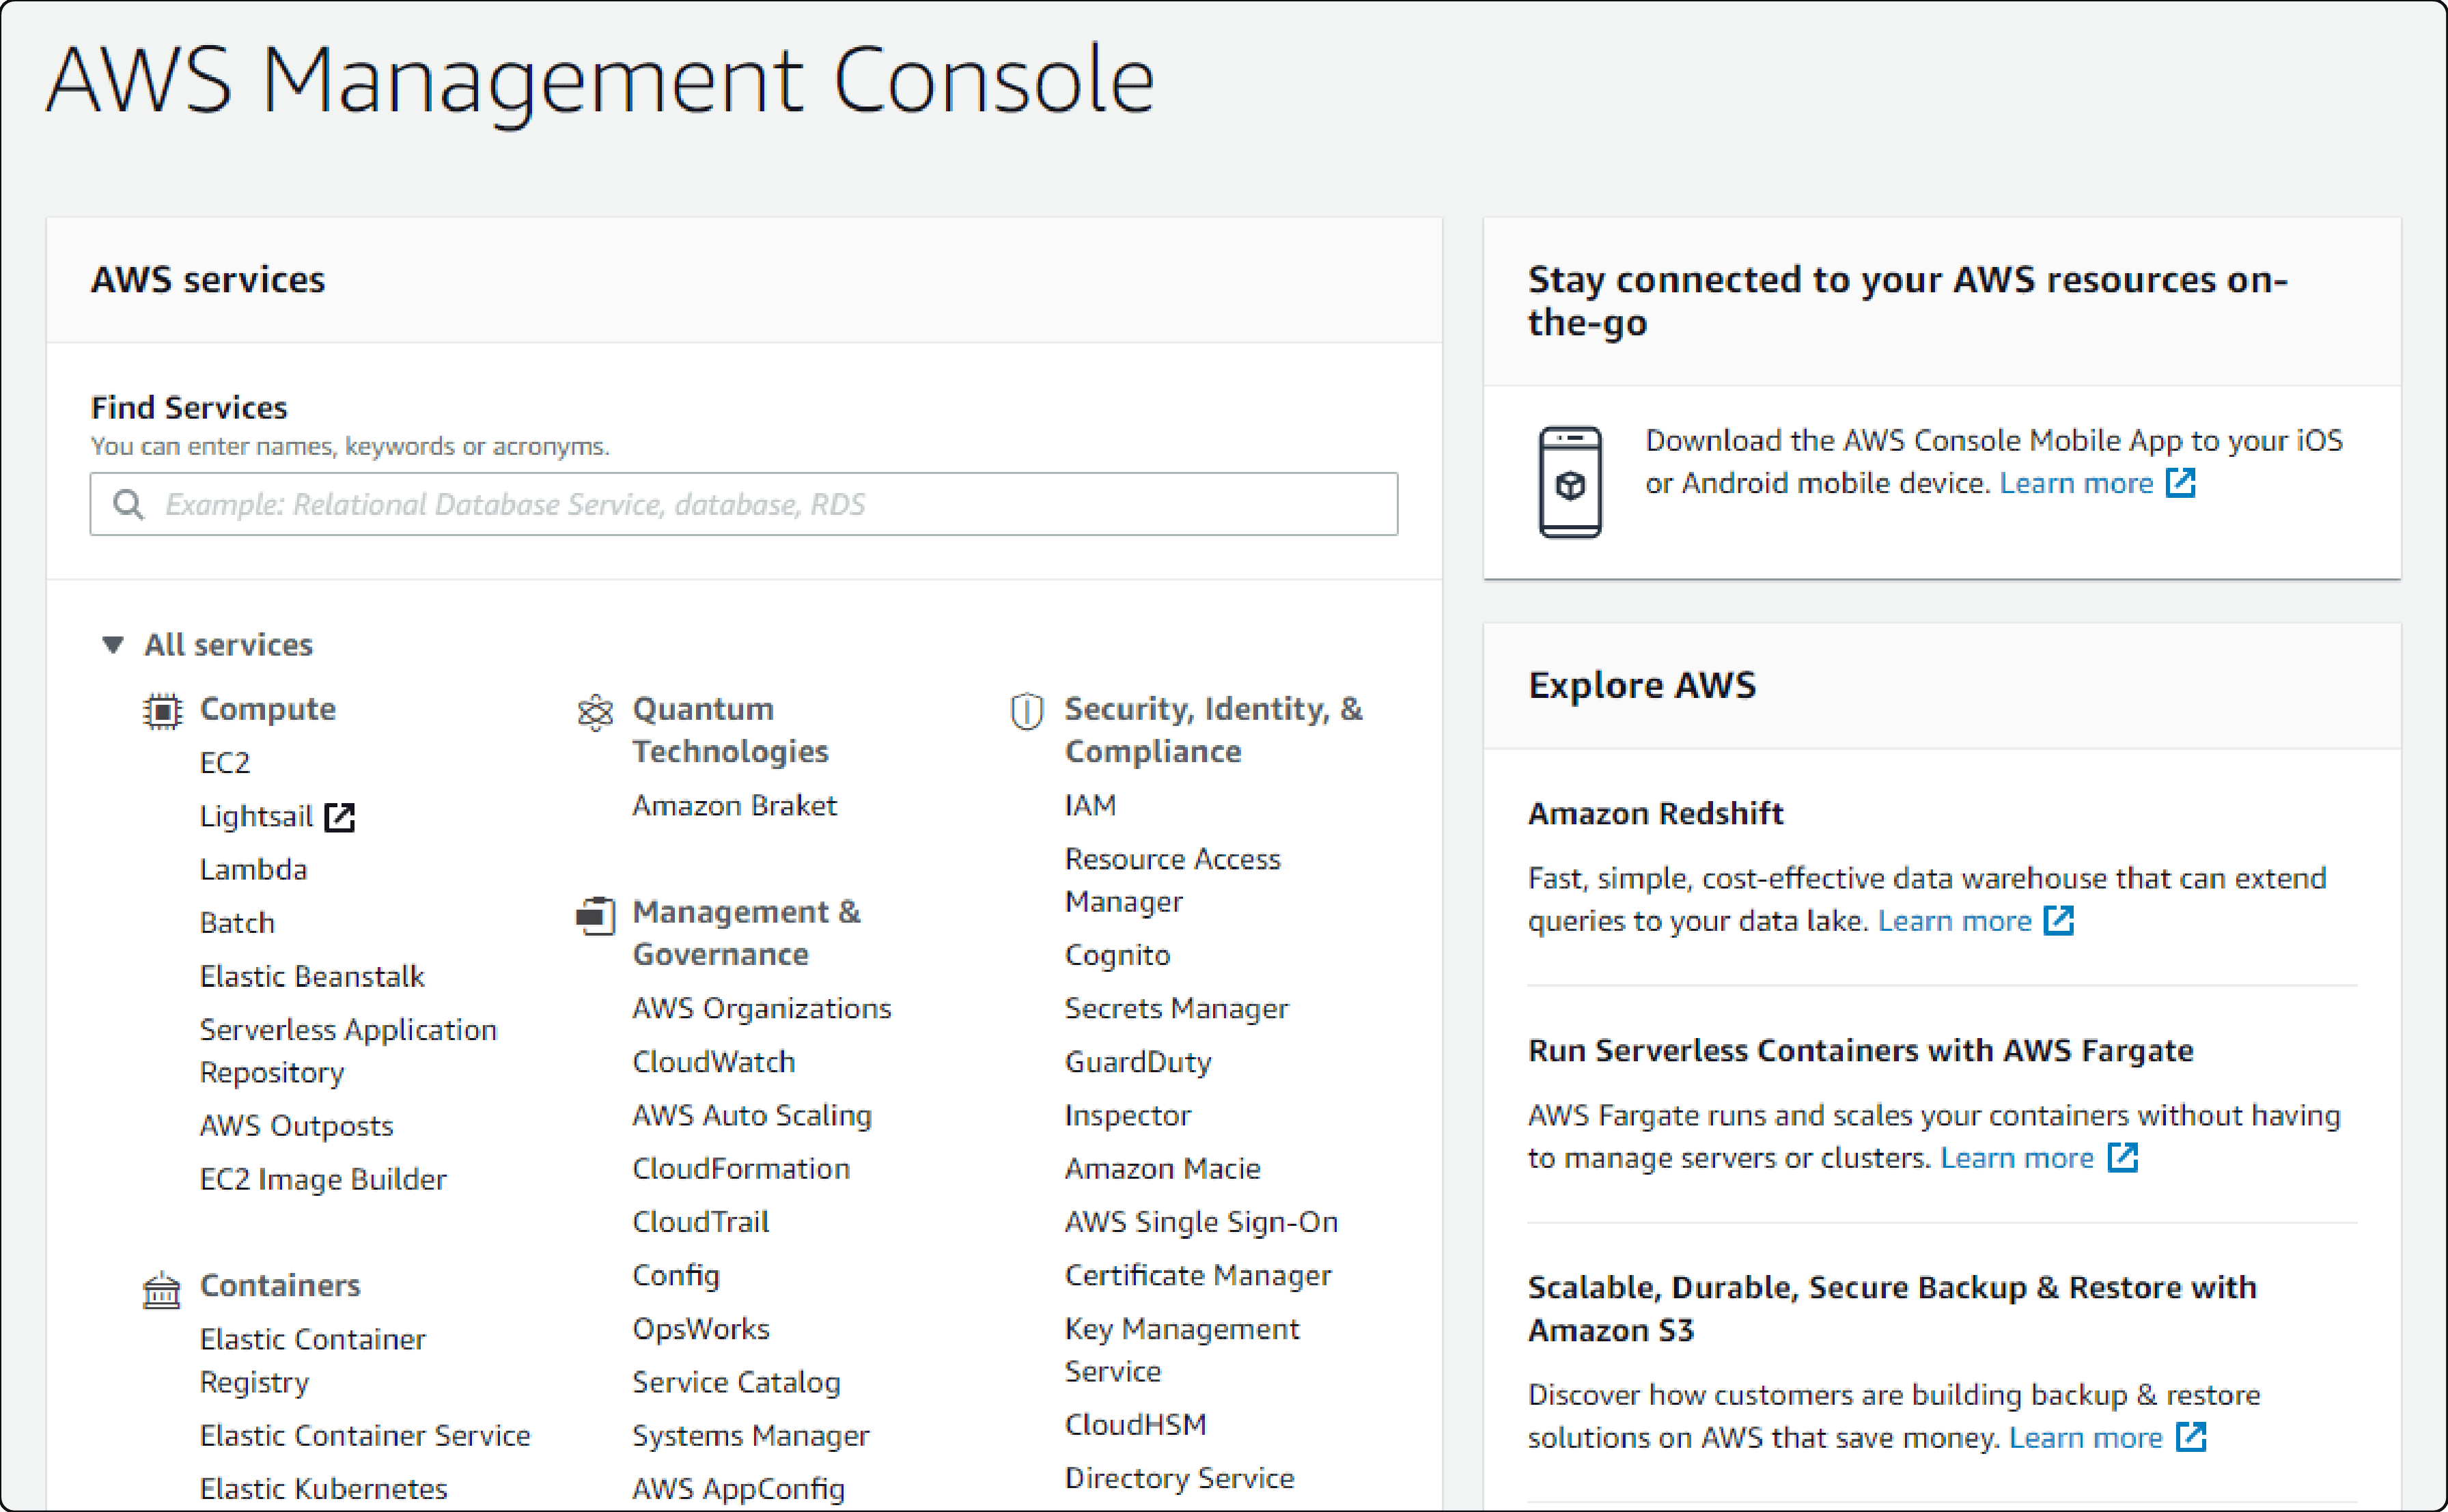 Log into AWS Management Console